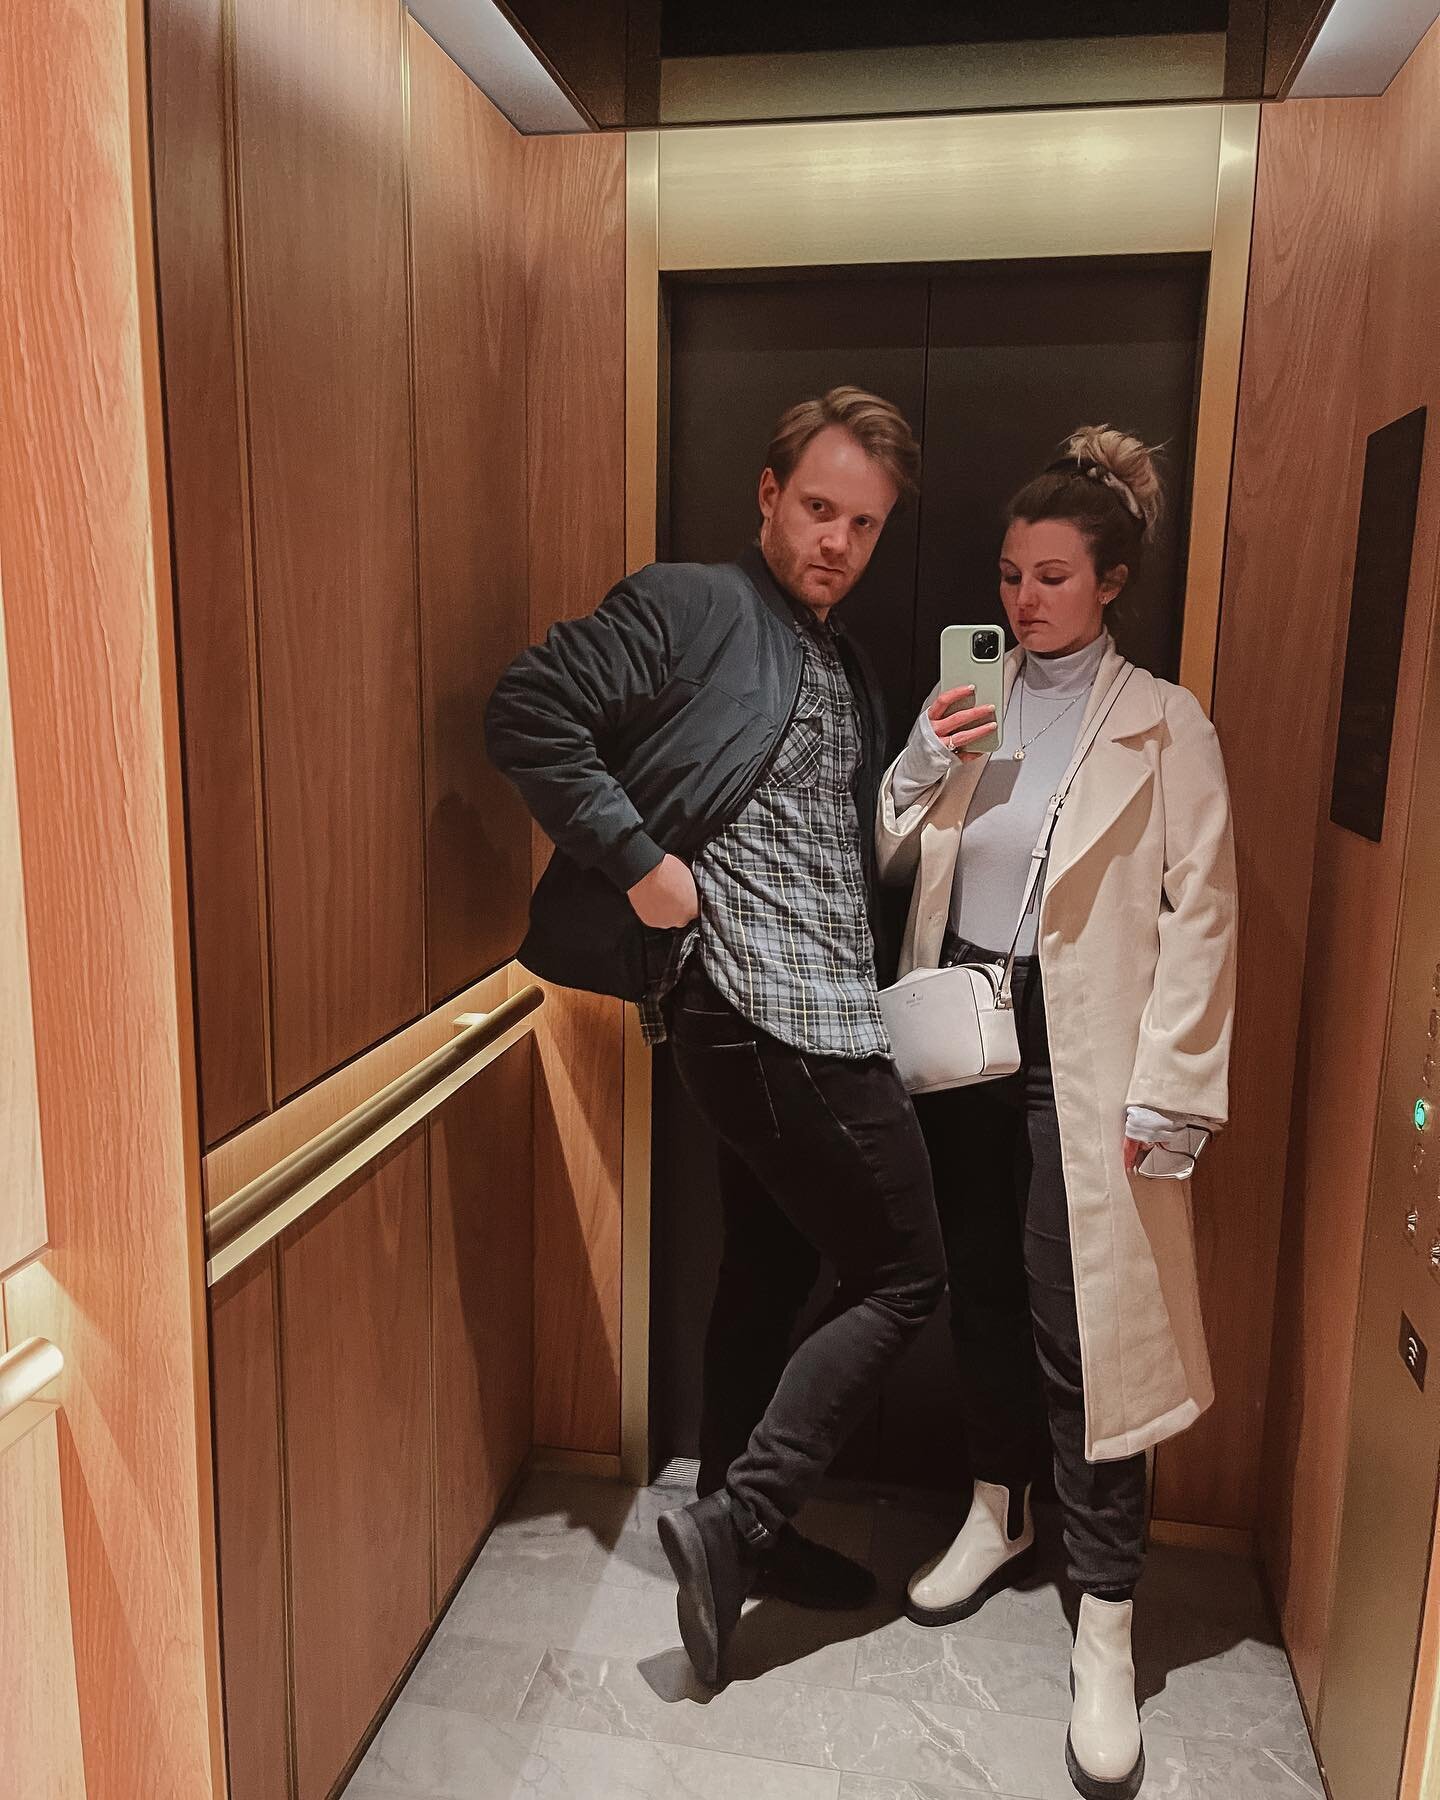 liked our outfits, took an elevator selfie 👌🏽😂 🇬🇧 

#london #london🇬🇧 #londonfashion